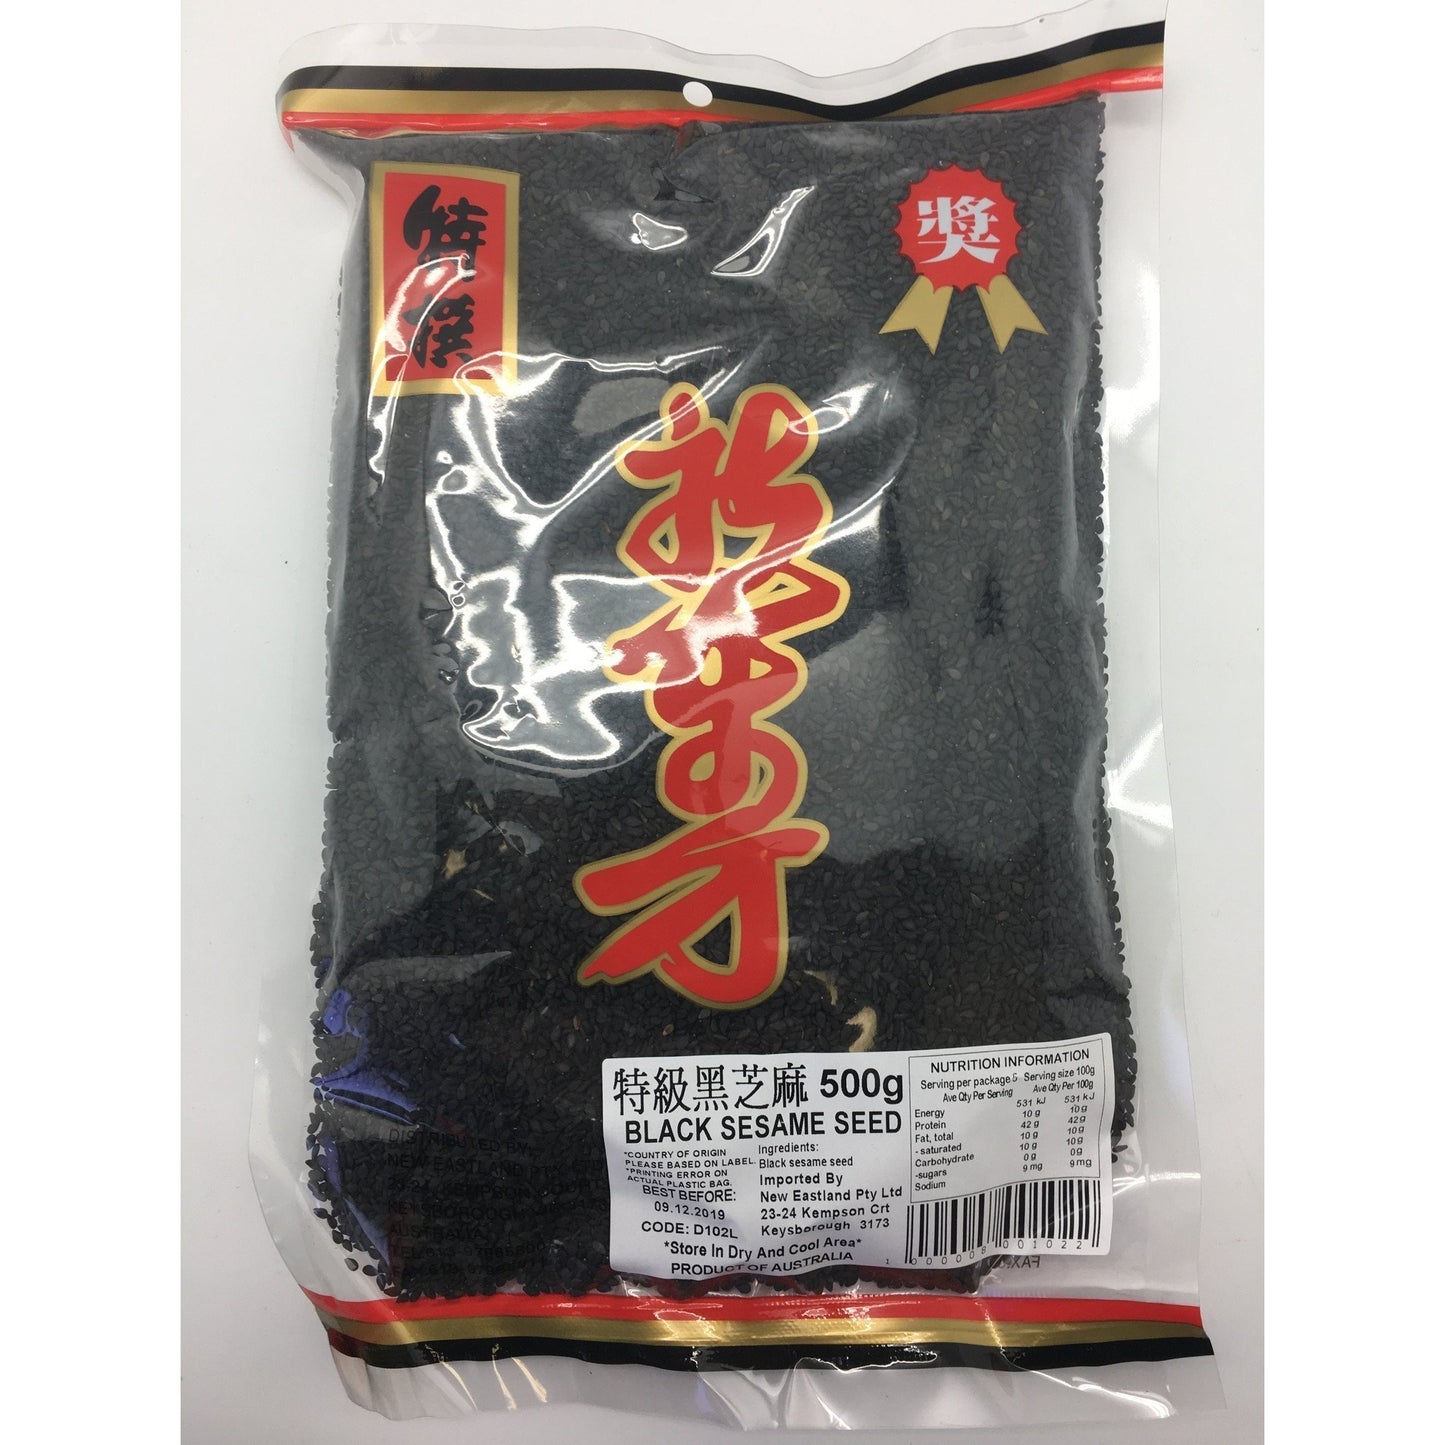 D102L New Eastland Pty Ltd - Black Sesame Seed 500g - 25 bags / 1 CTN - New Eastland Pty Ltd - Asian food wholesalers